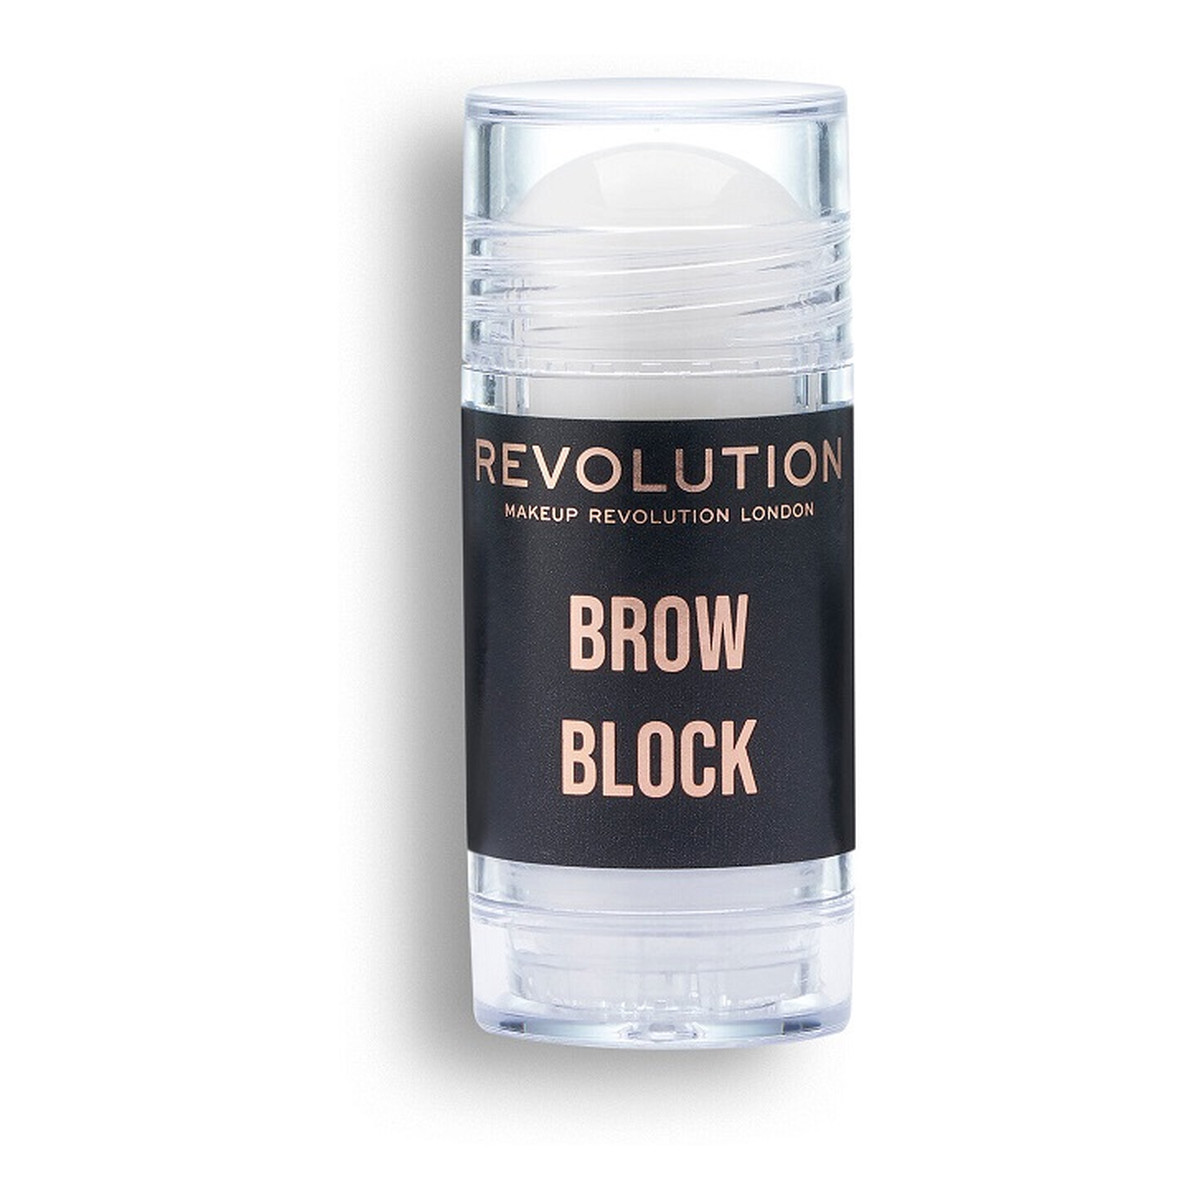 Makeup Revolution Creator Revolution Brow Block utrwalacz do brwi 12g